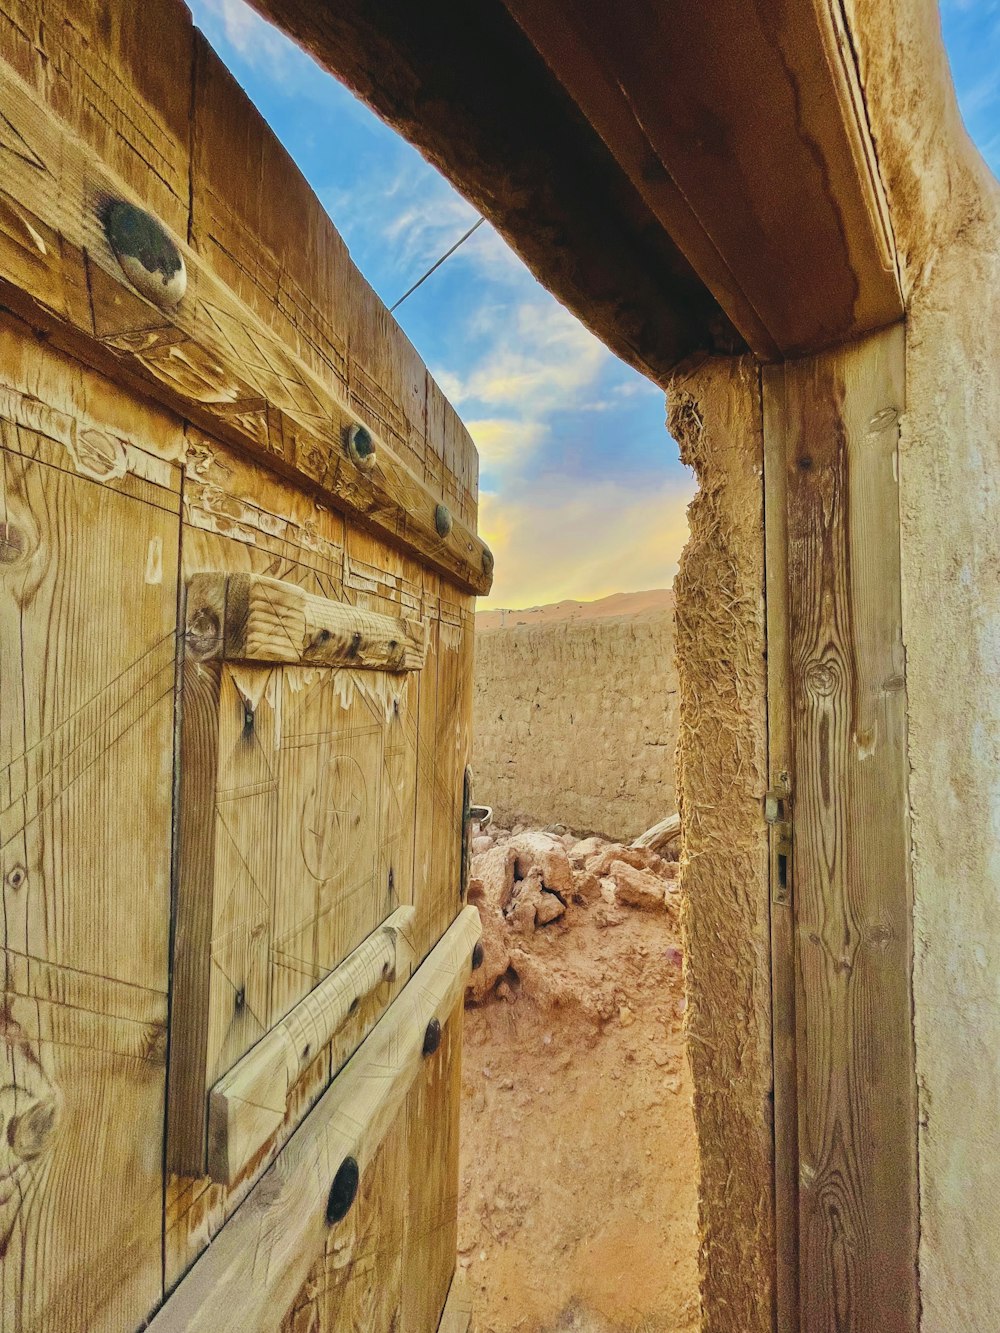 a wooden door leading to a desert landscape